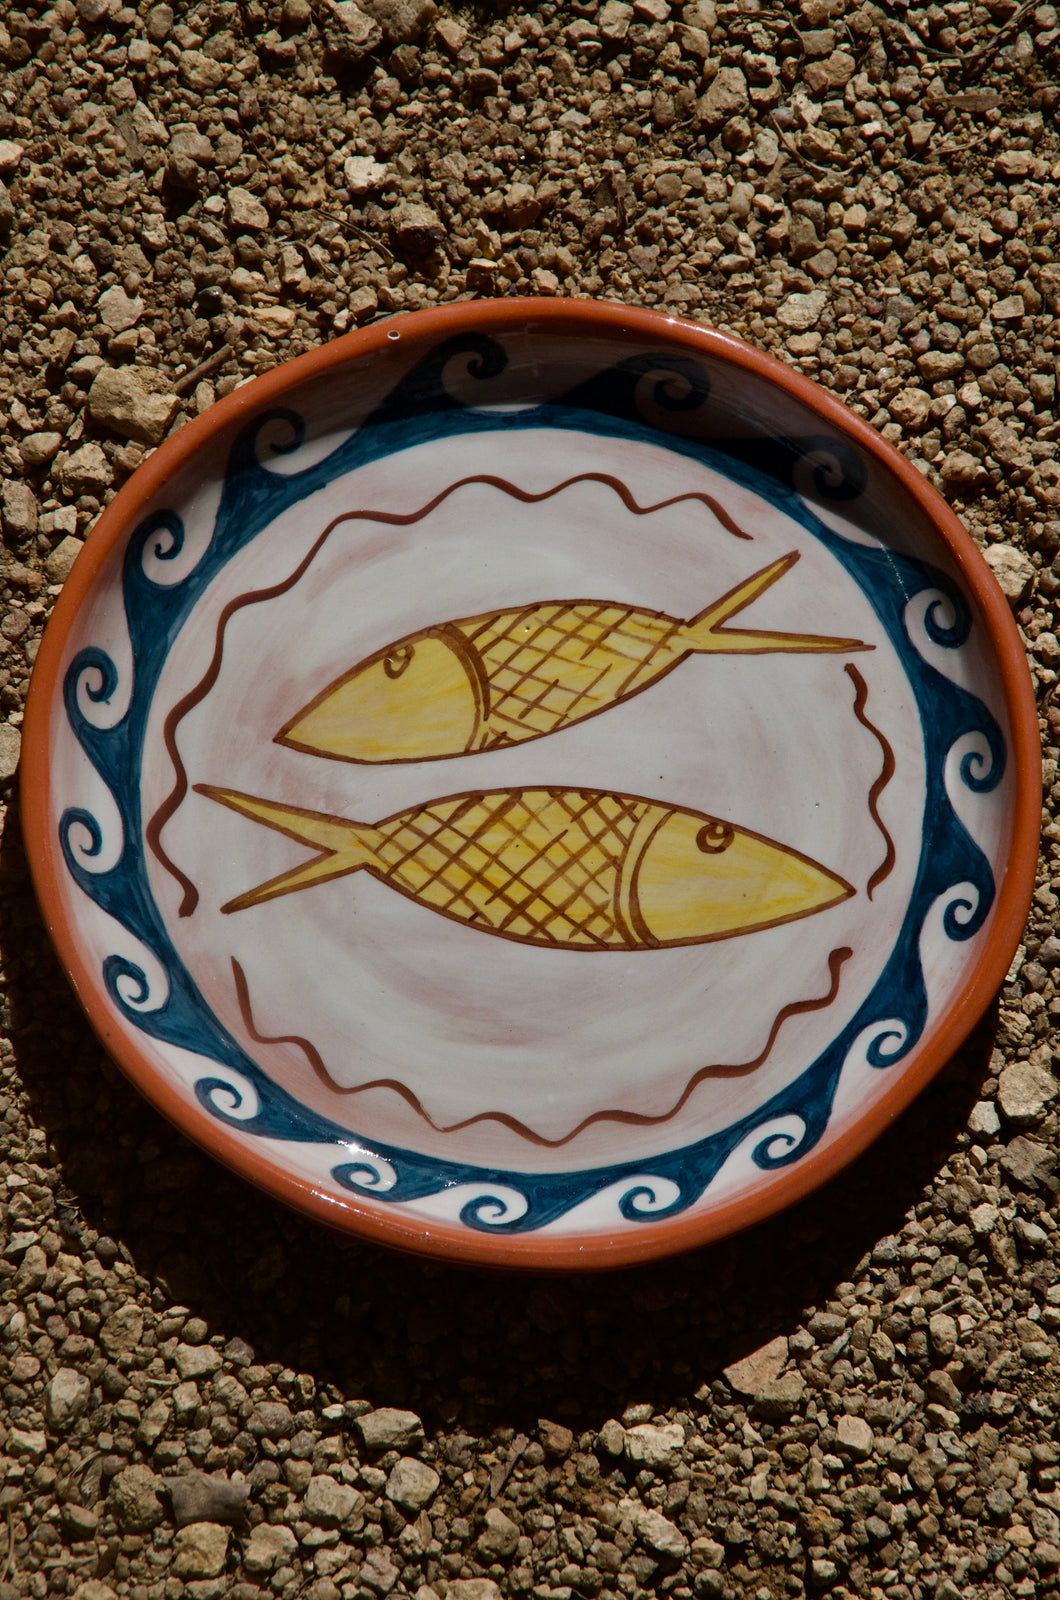 Sardine Plate - Two fish